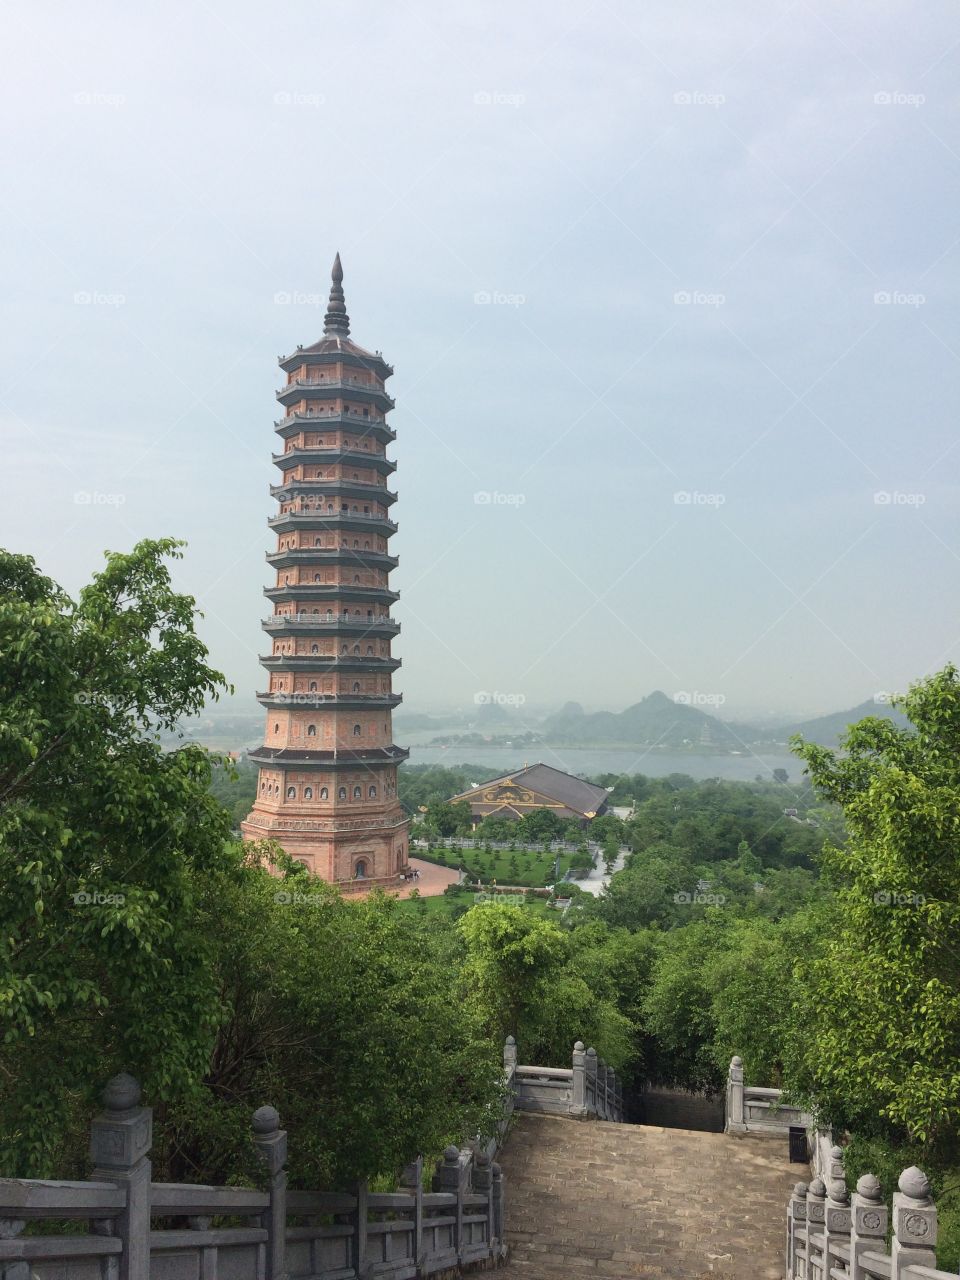 Bảo tháp - Ninh Bình - Vietnam